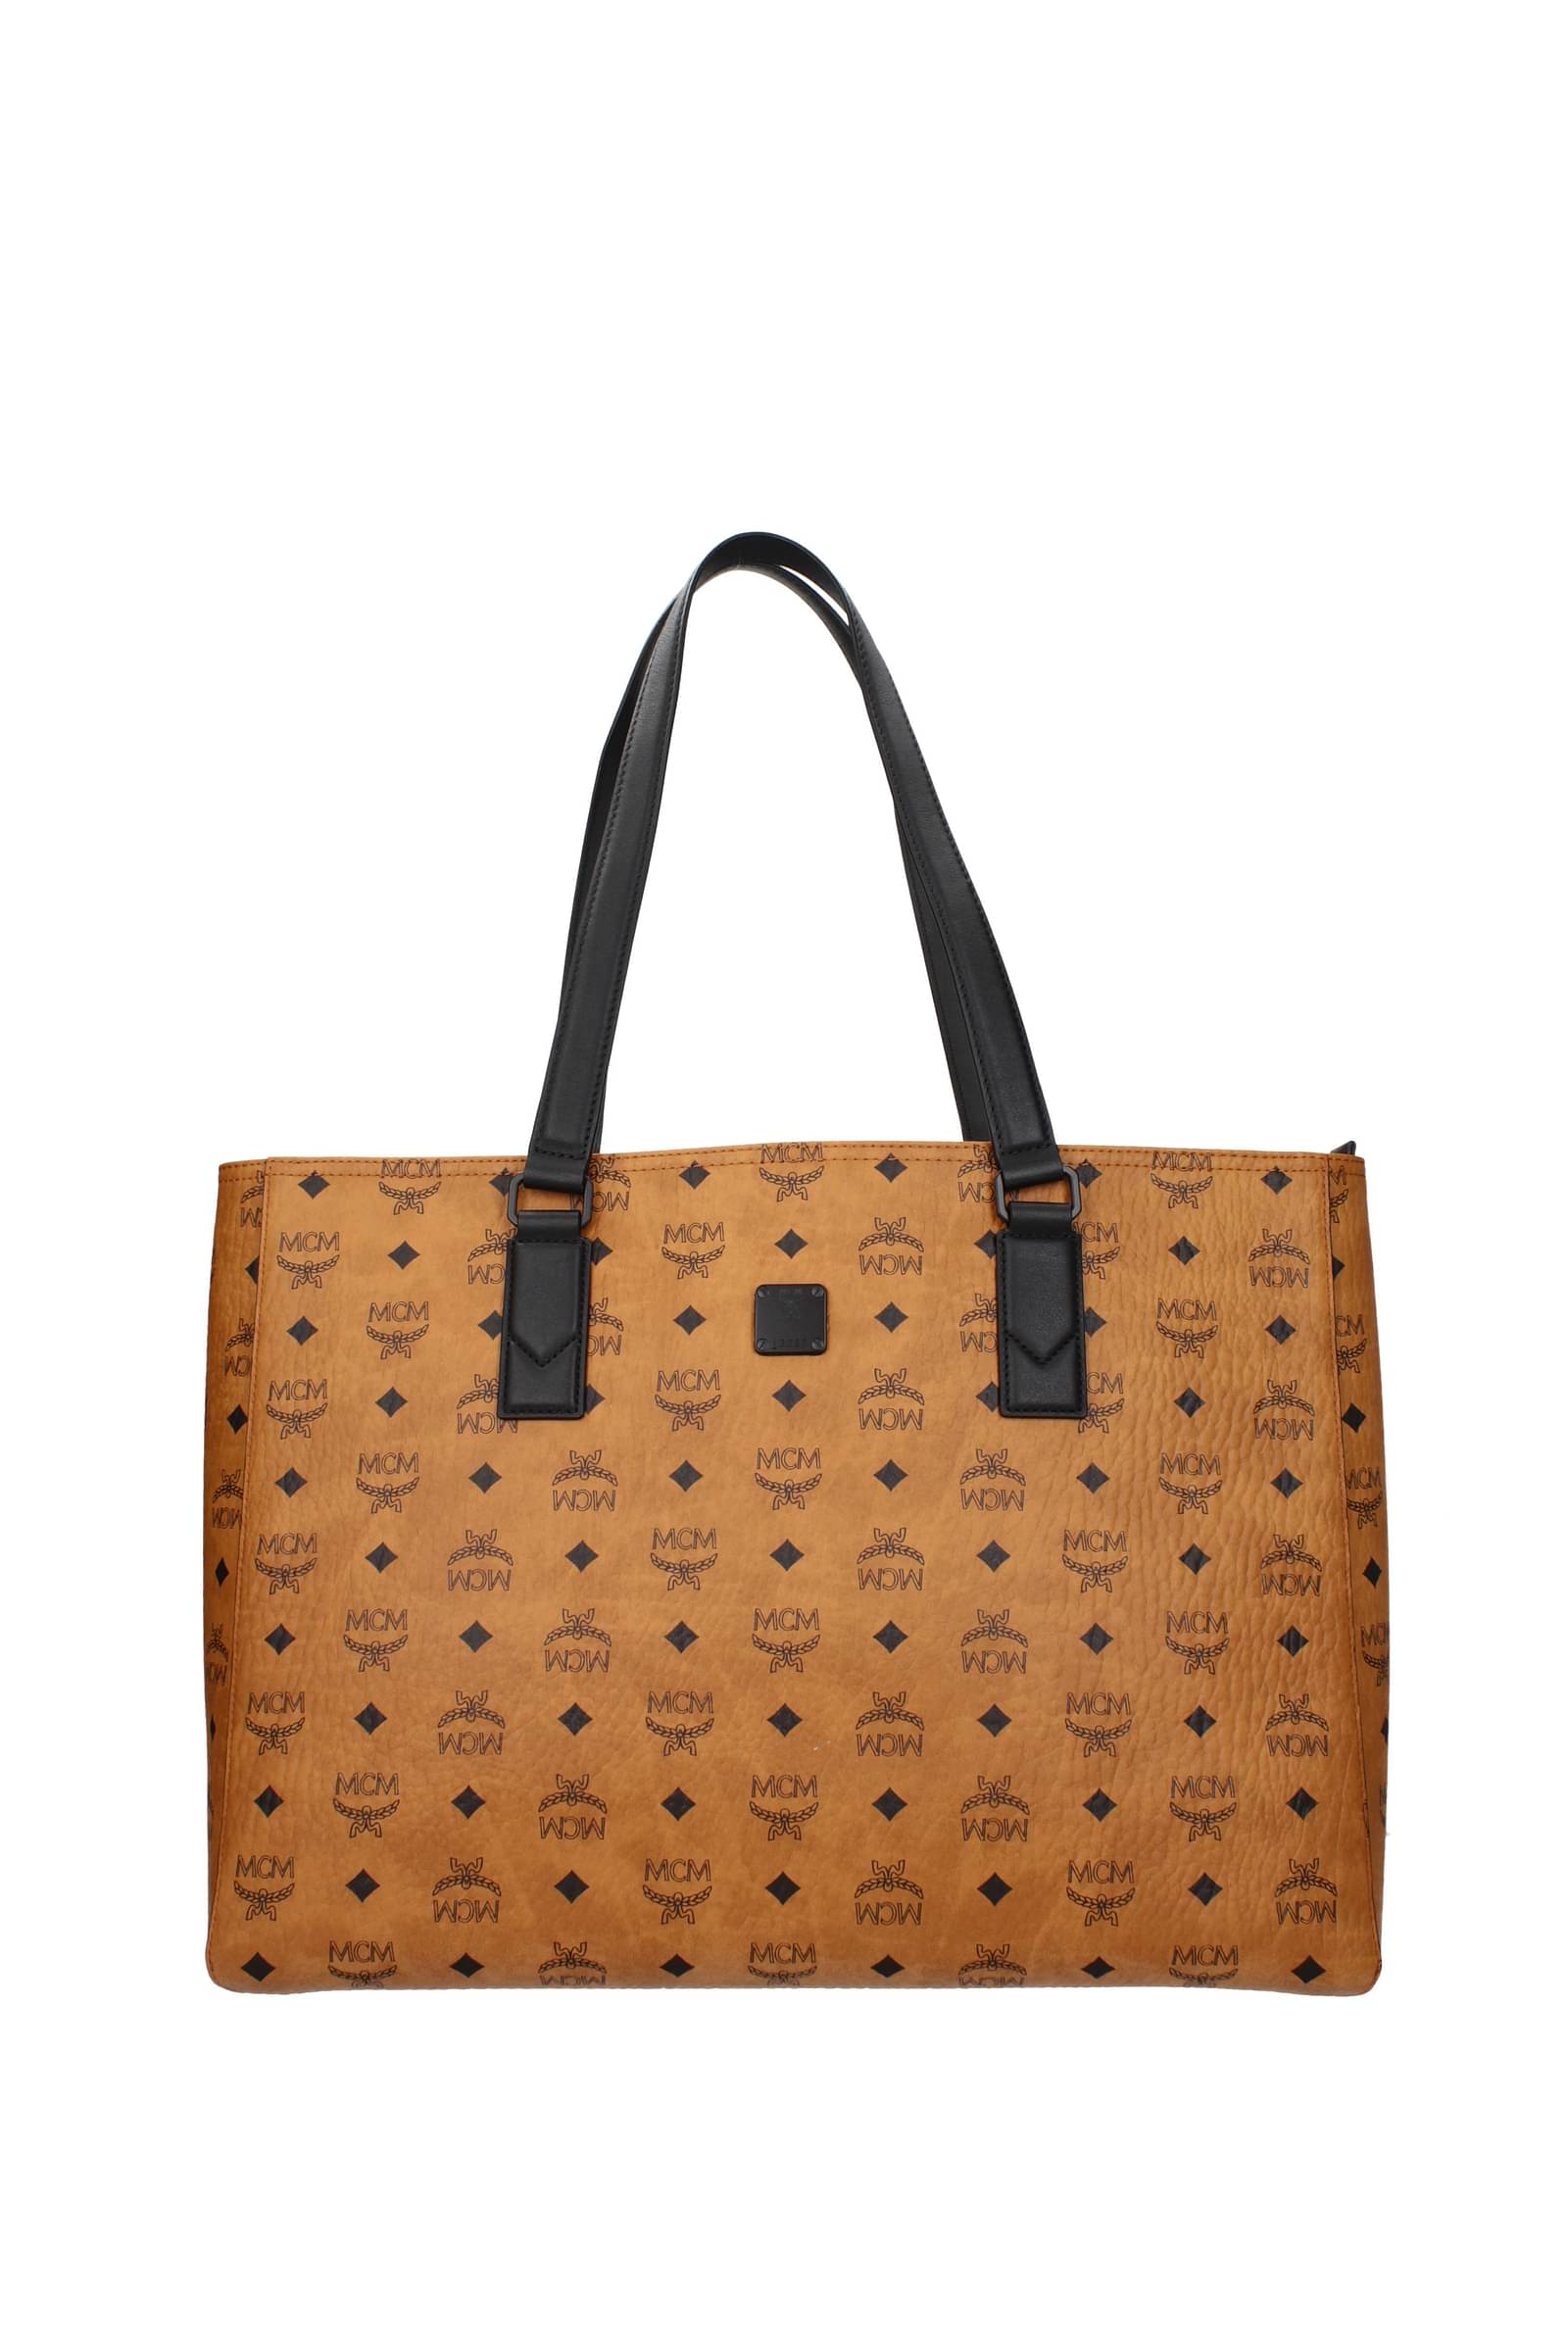 M.C. Leather Duffle Shoulder Bag | eBay